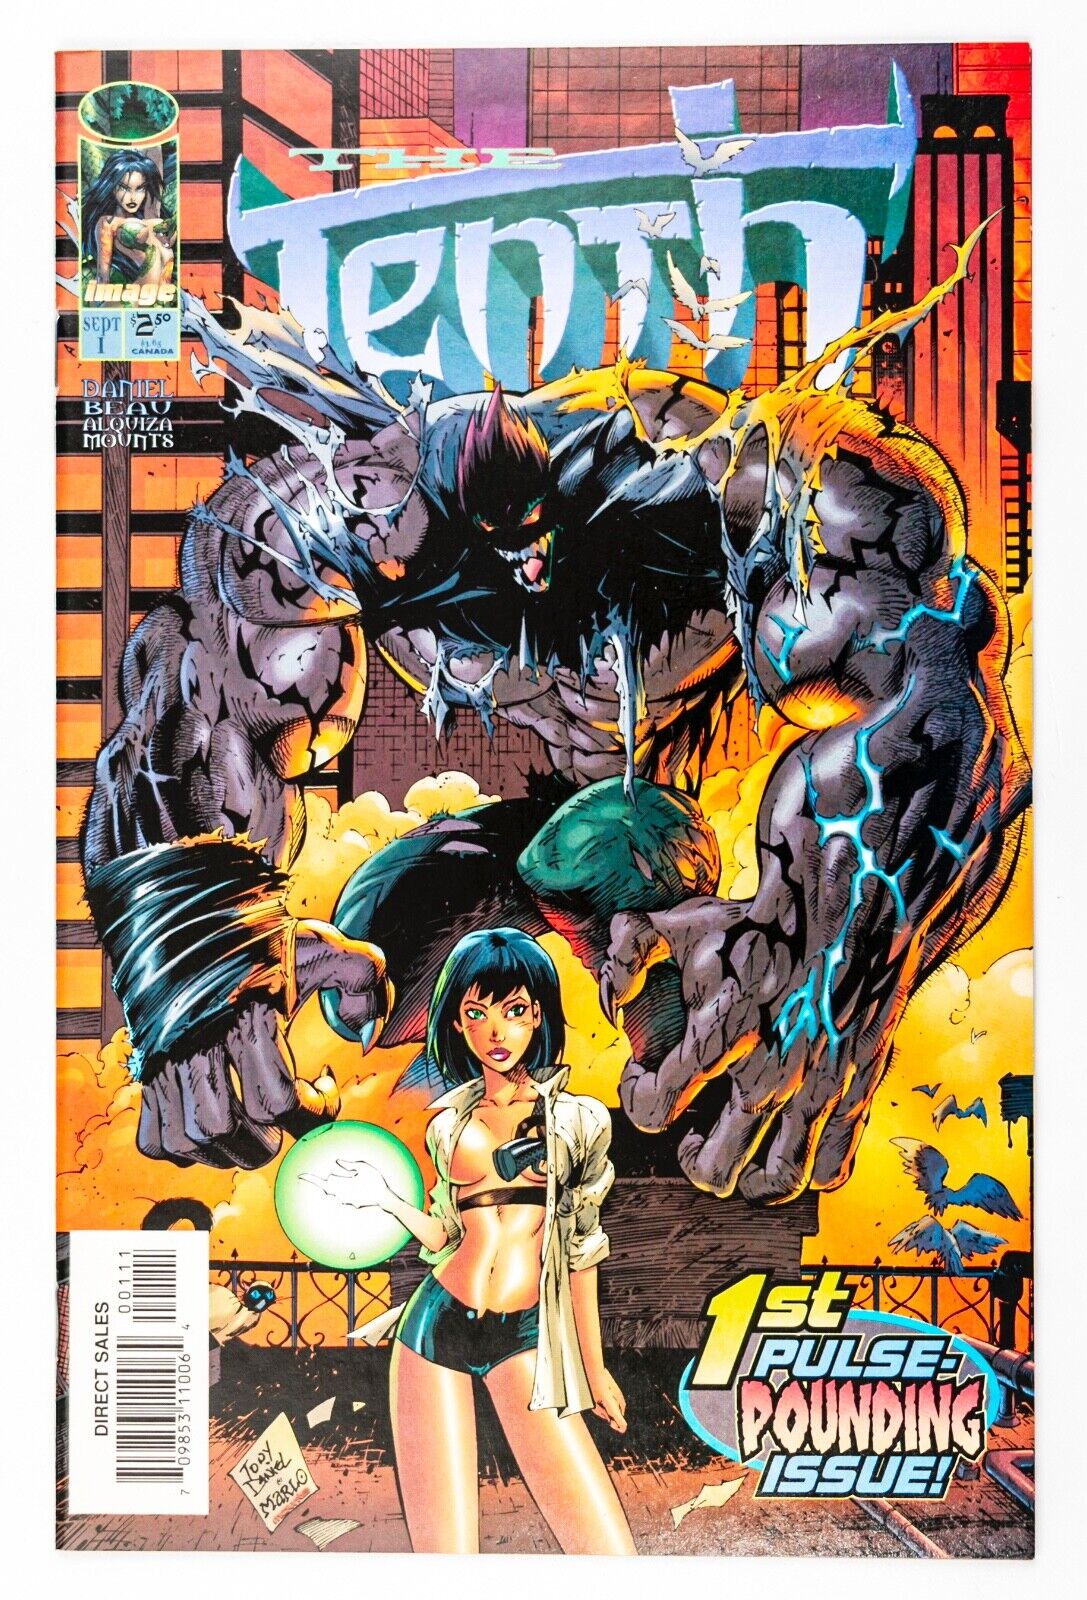 The Tenth #1 (1997 Image Comics) Tony Daniel Creator, Art & Cover, Unread NM-